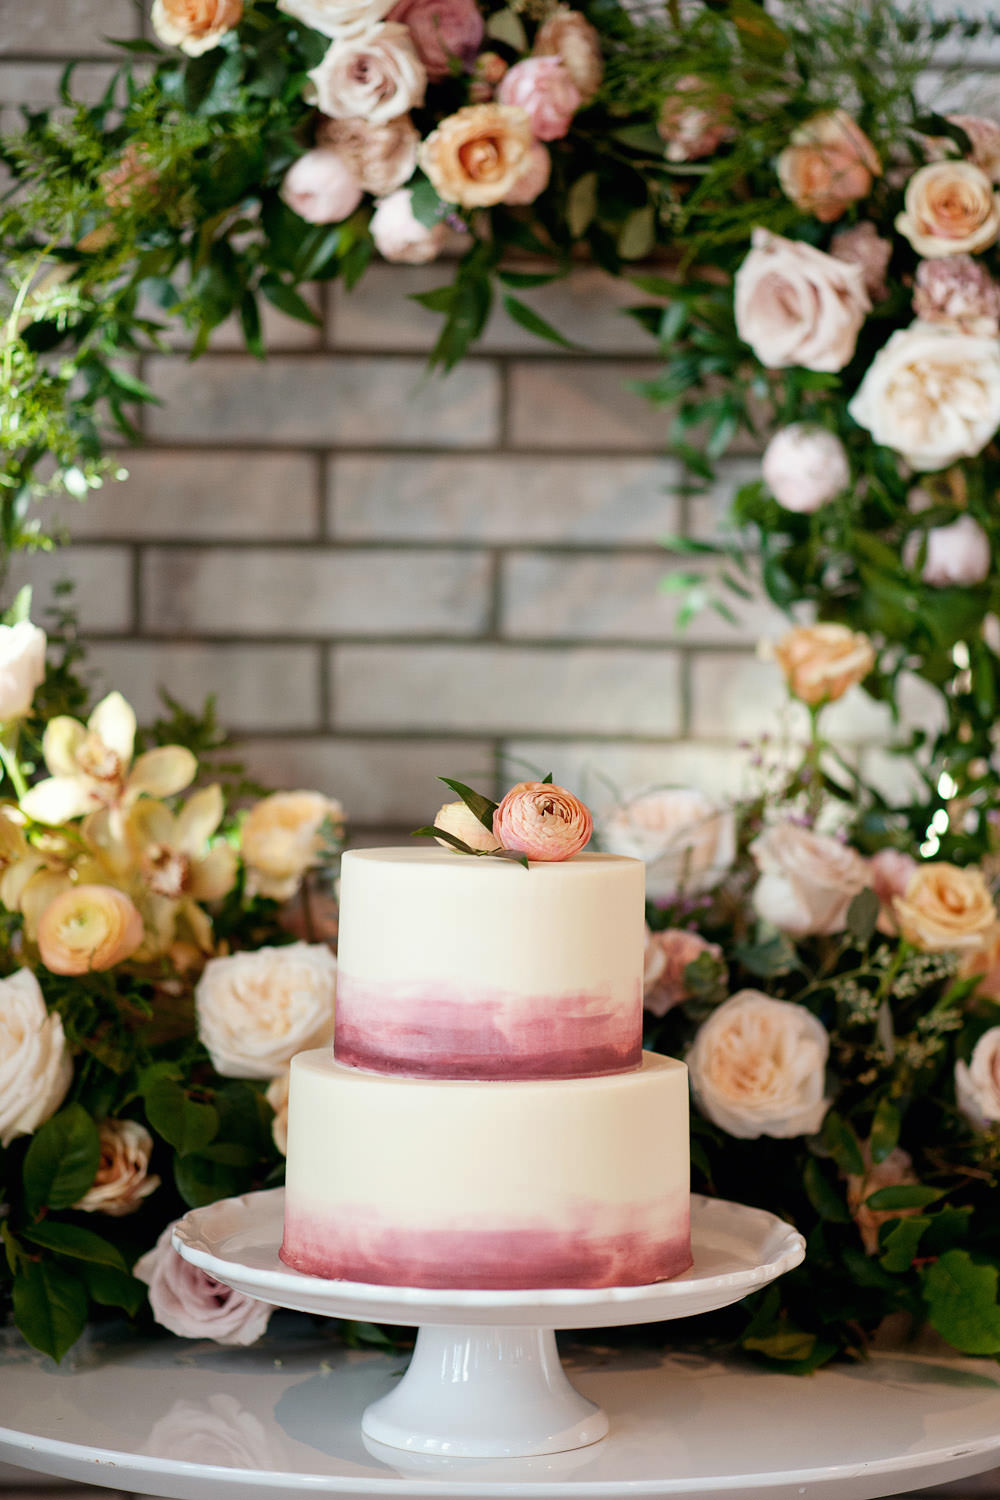 Wedding cake from Crave Calgary wedding portfolio for Tara Whittaker Photography